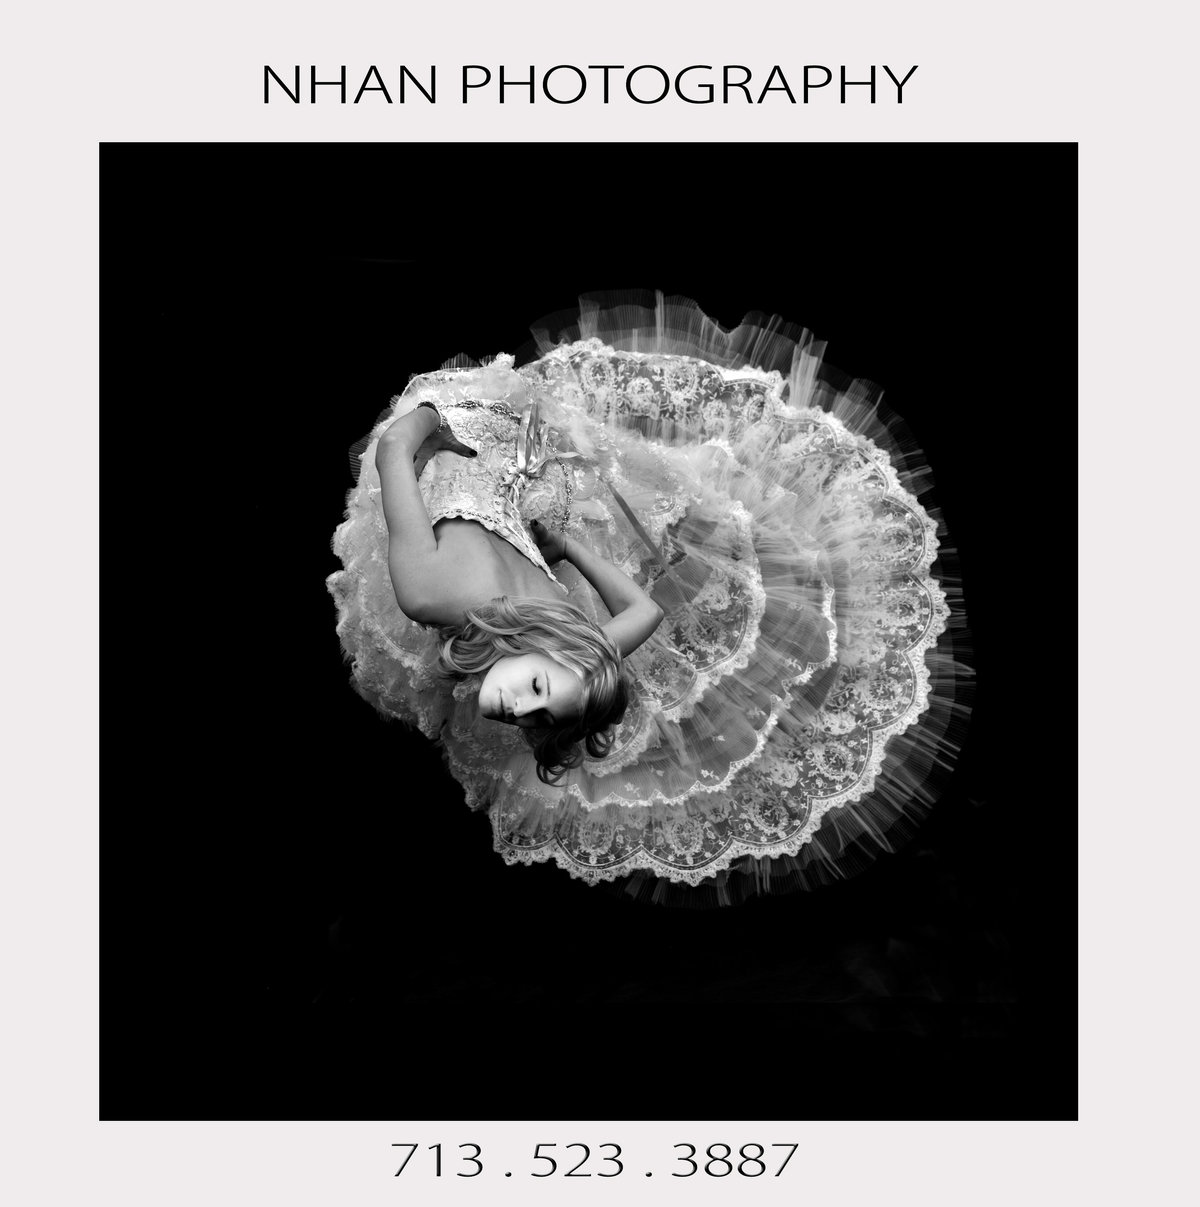 Nhan Photography